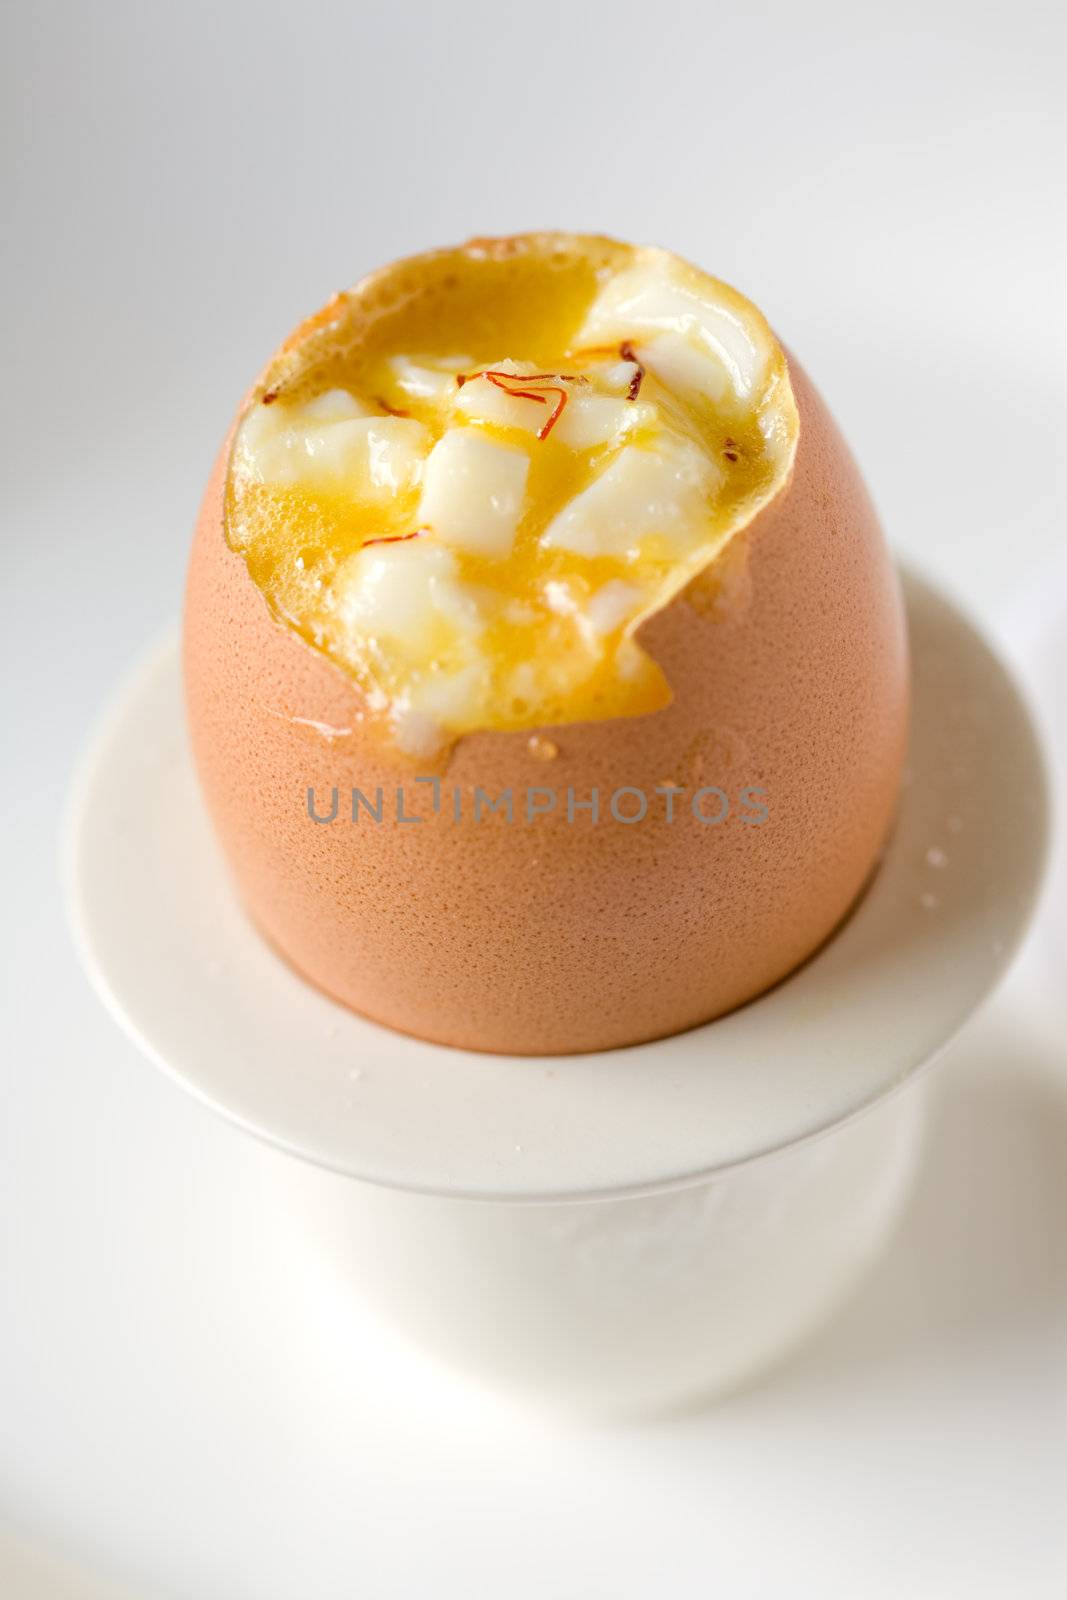 Safraan egg by Fotosmurf